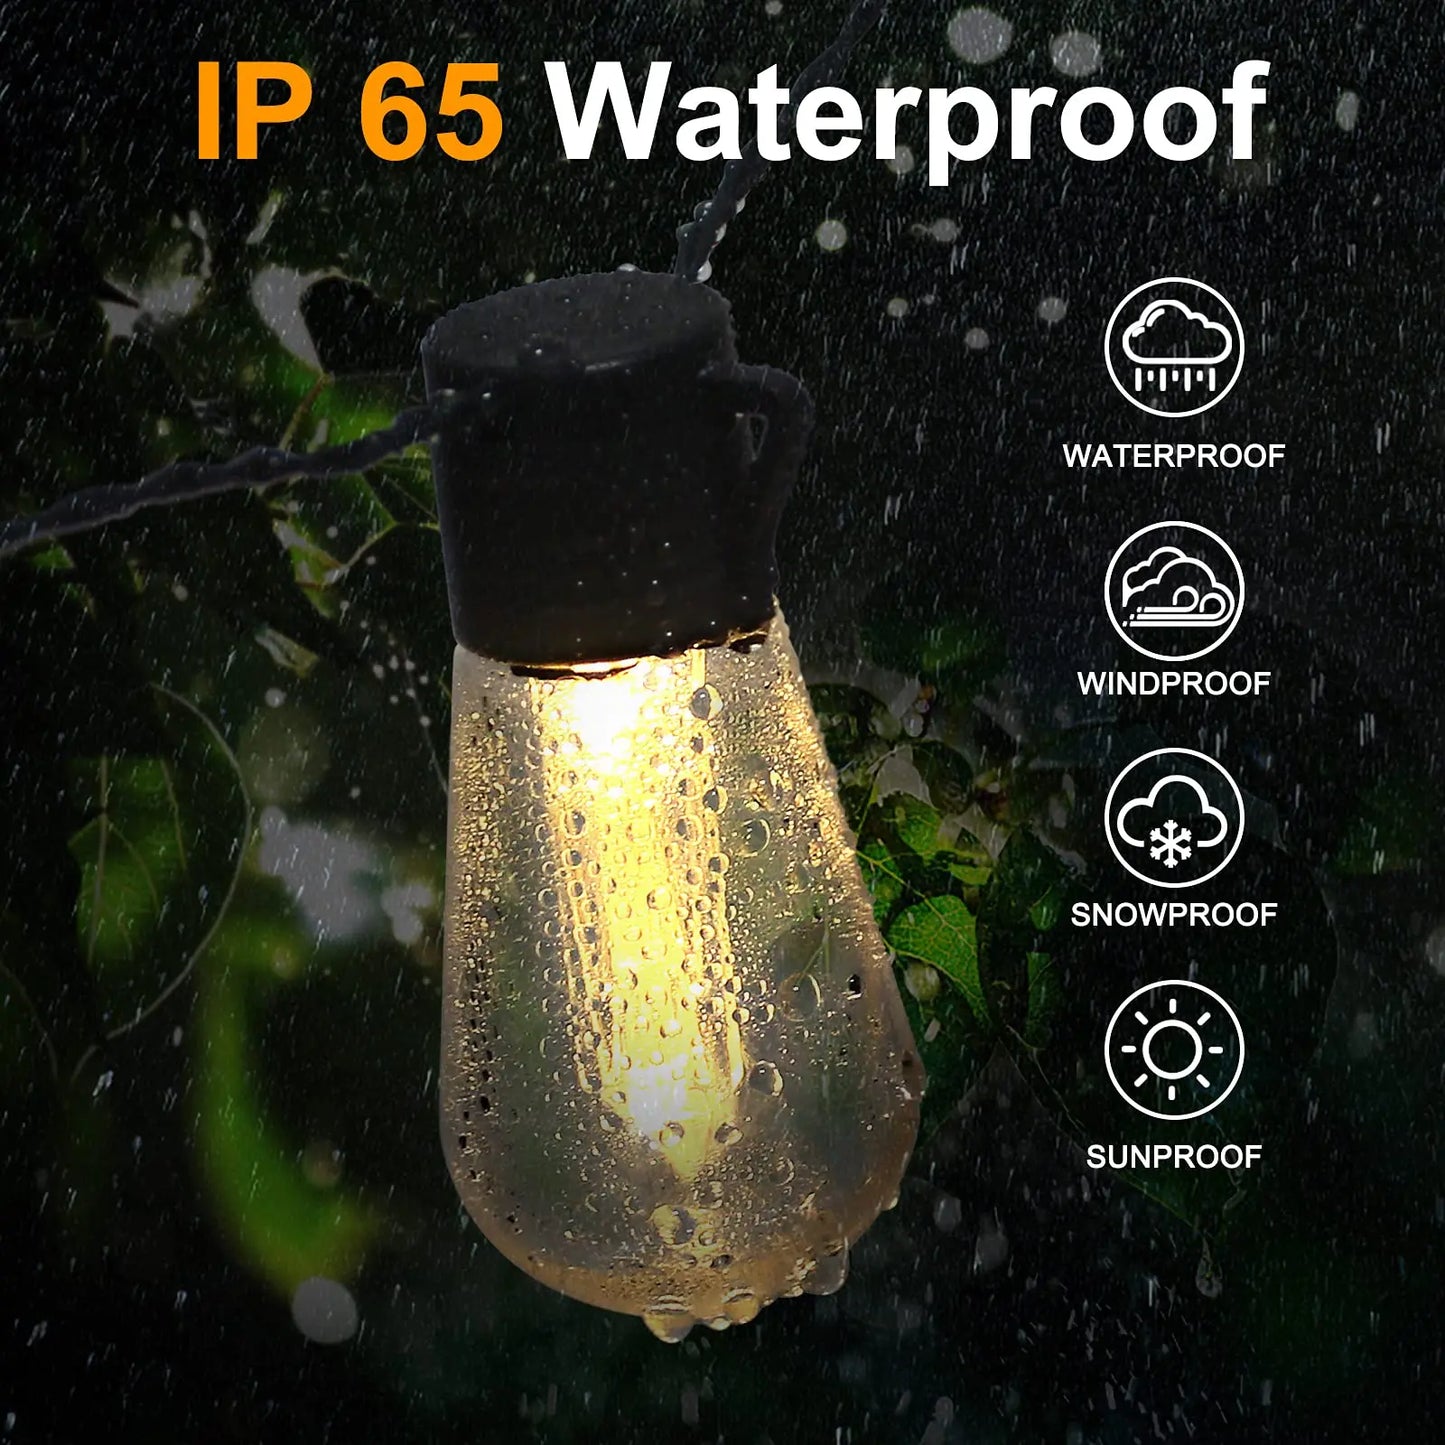 LED Solar String Light Outdoor IP65 Waterproof